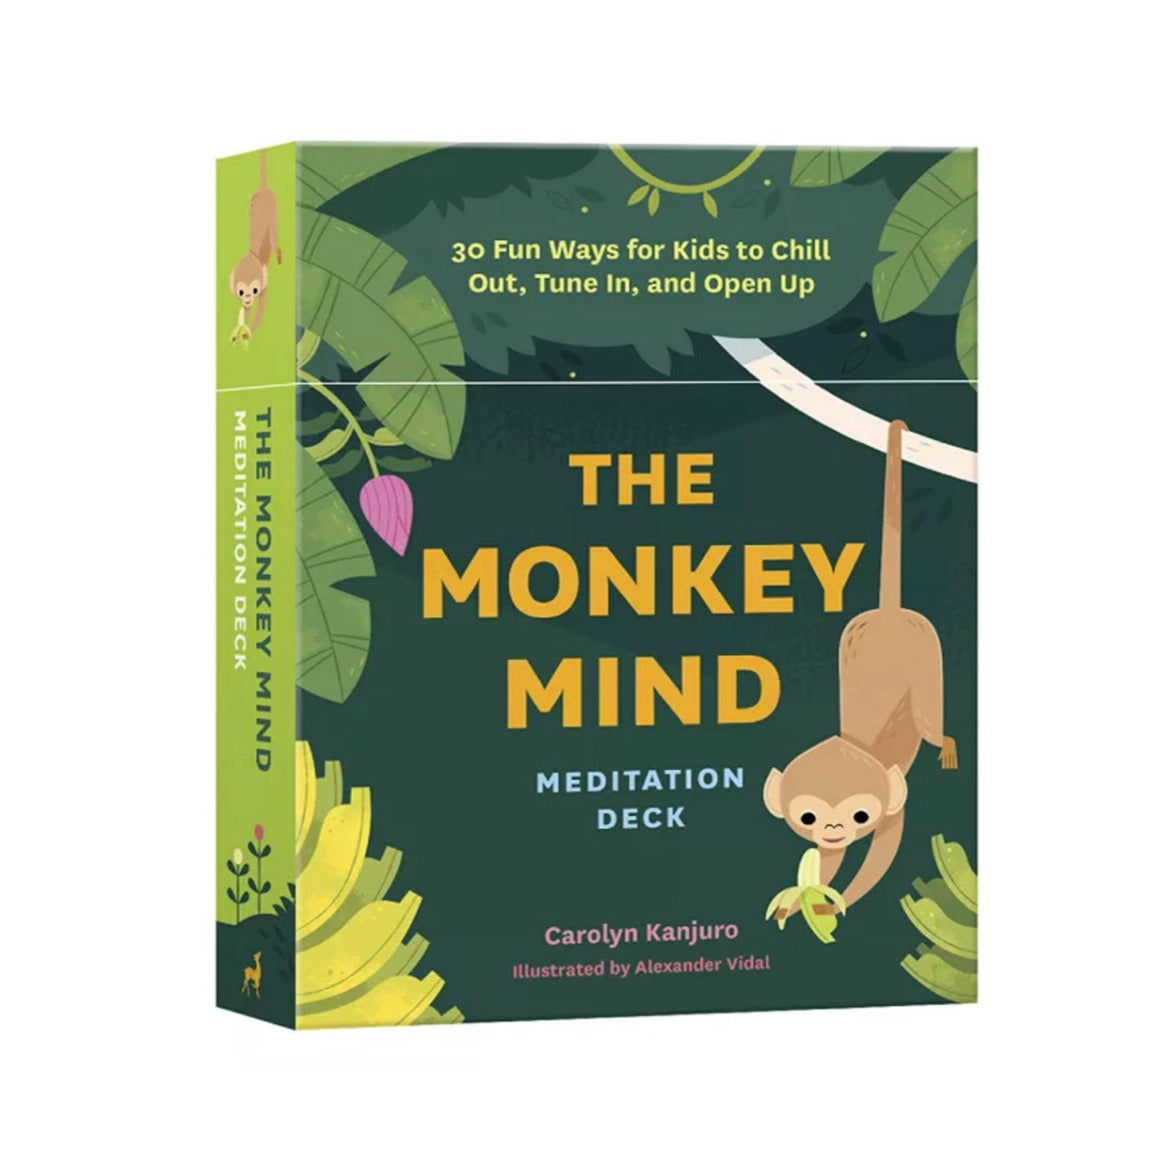 The Monkey Mind Meditation Deck by Carolyn Kanjuro